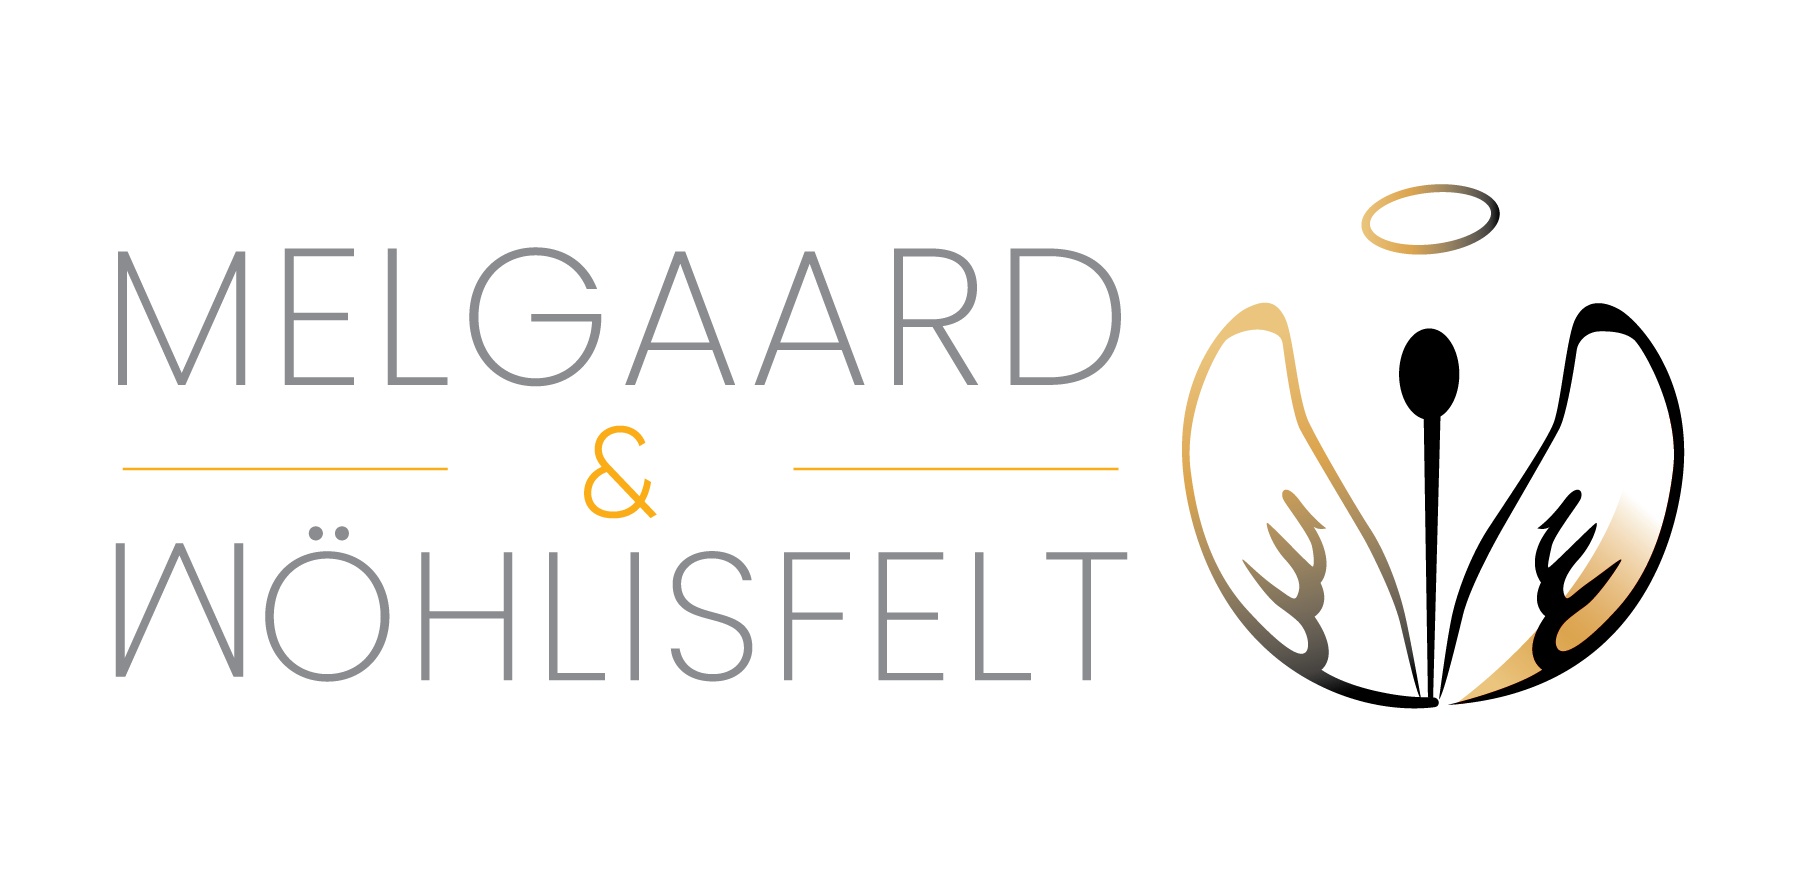 Melgaard & Wöhlisfelt